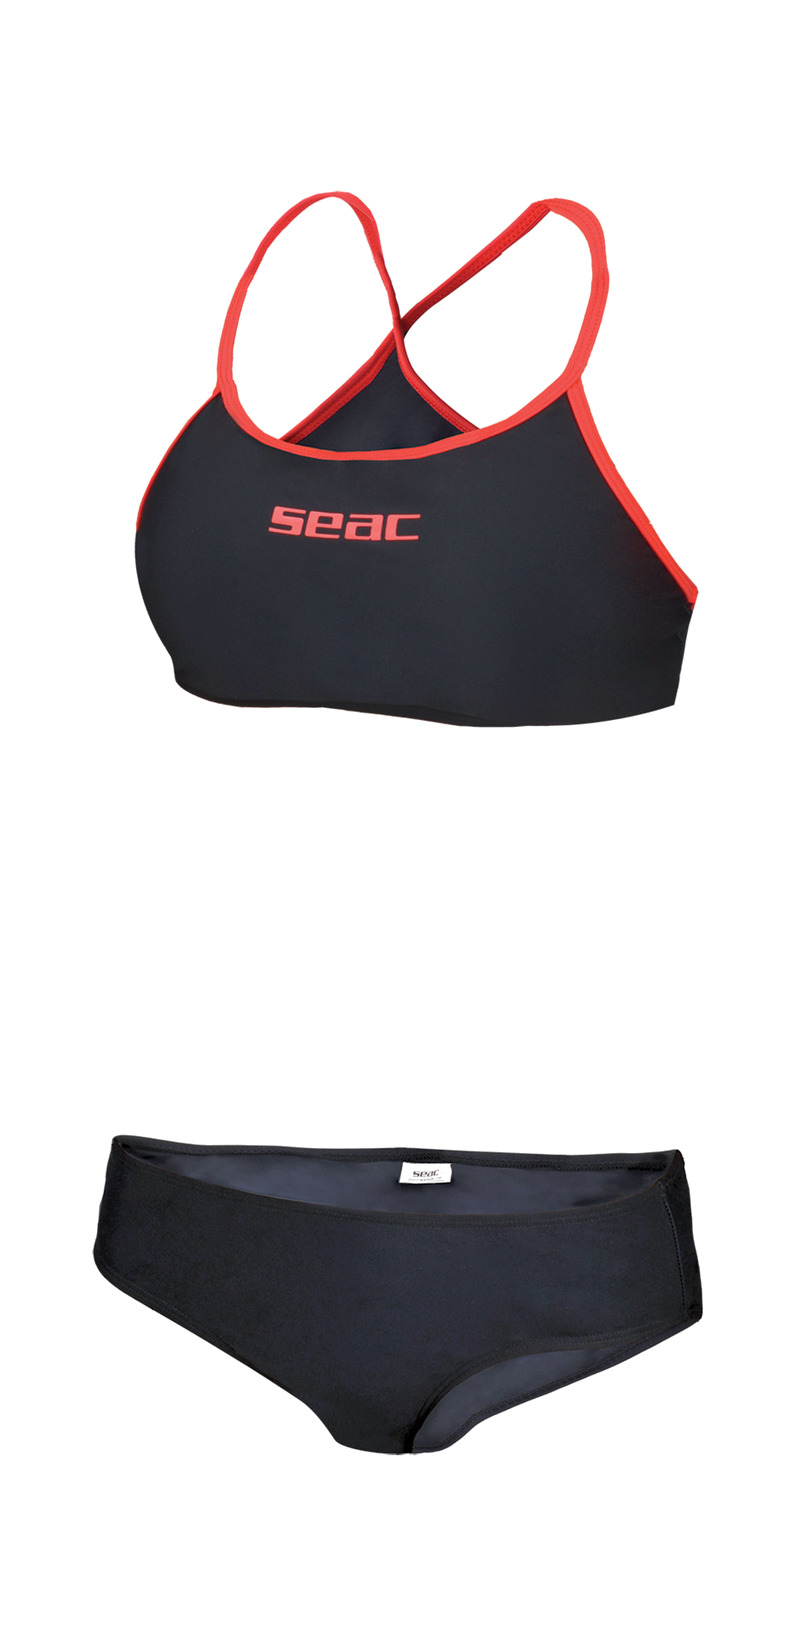 SEAC SUB Swimsuit bikini swimsuit for women - Afbeelding 1 van 1